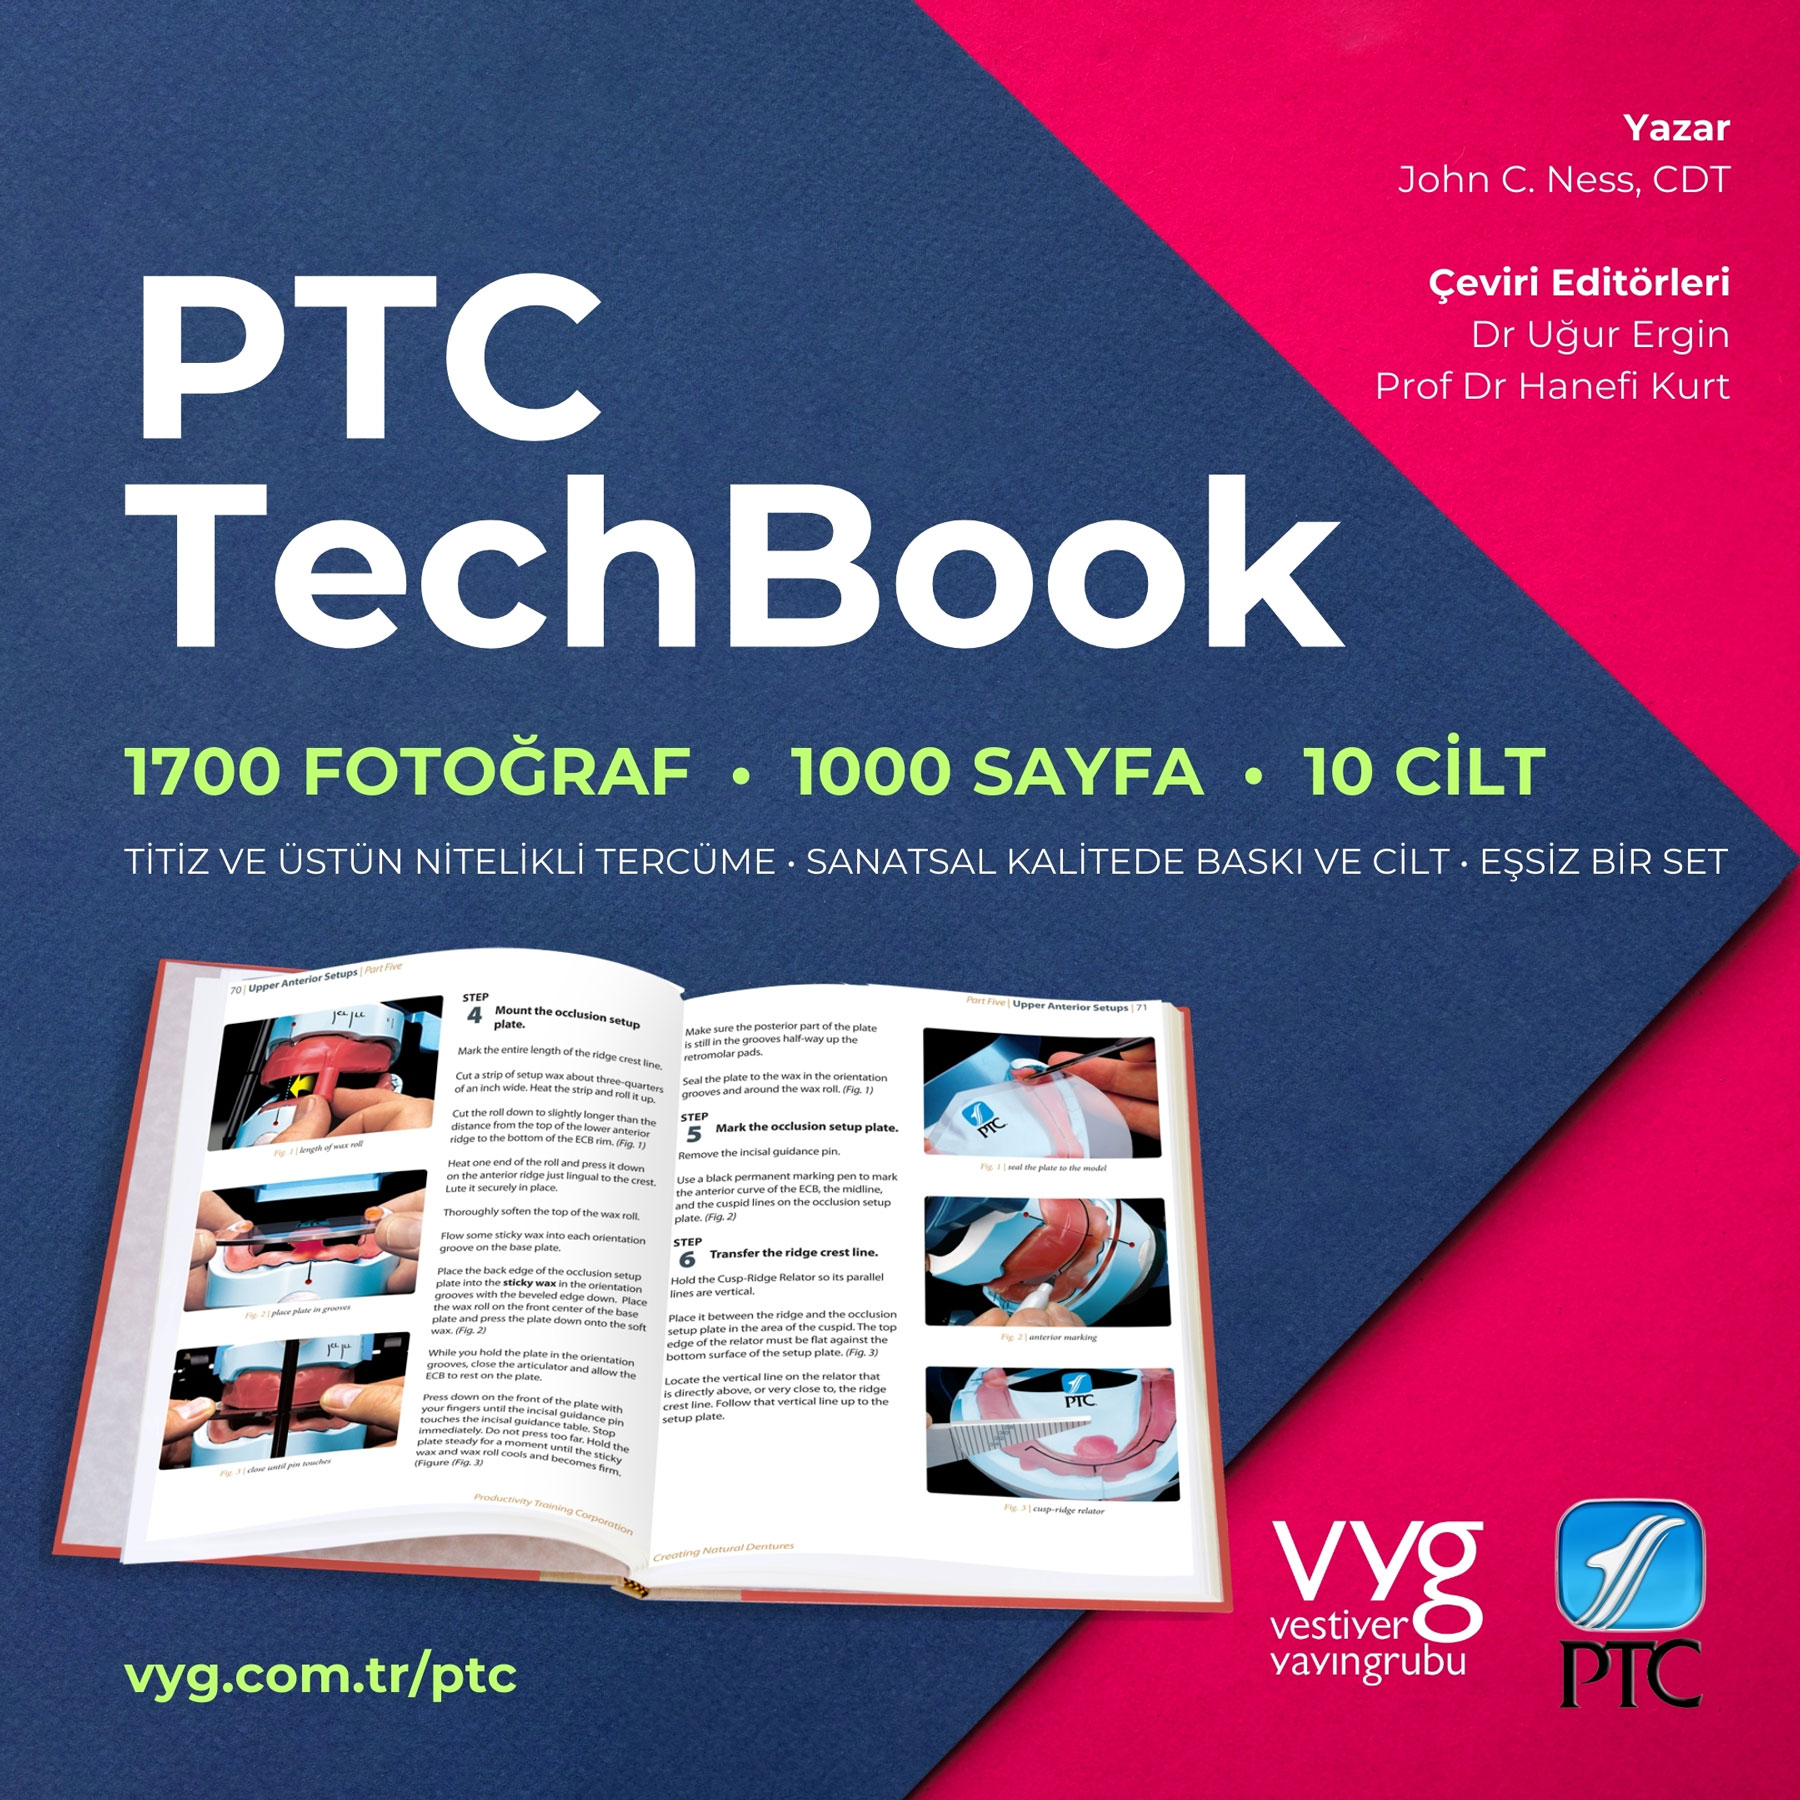 PTC TechBook Serisi